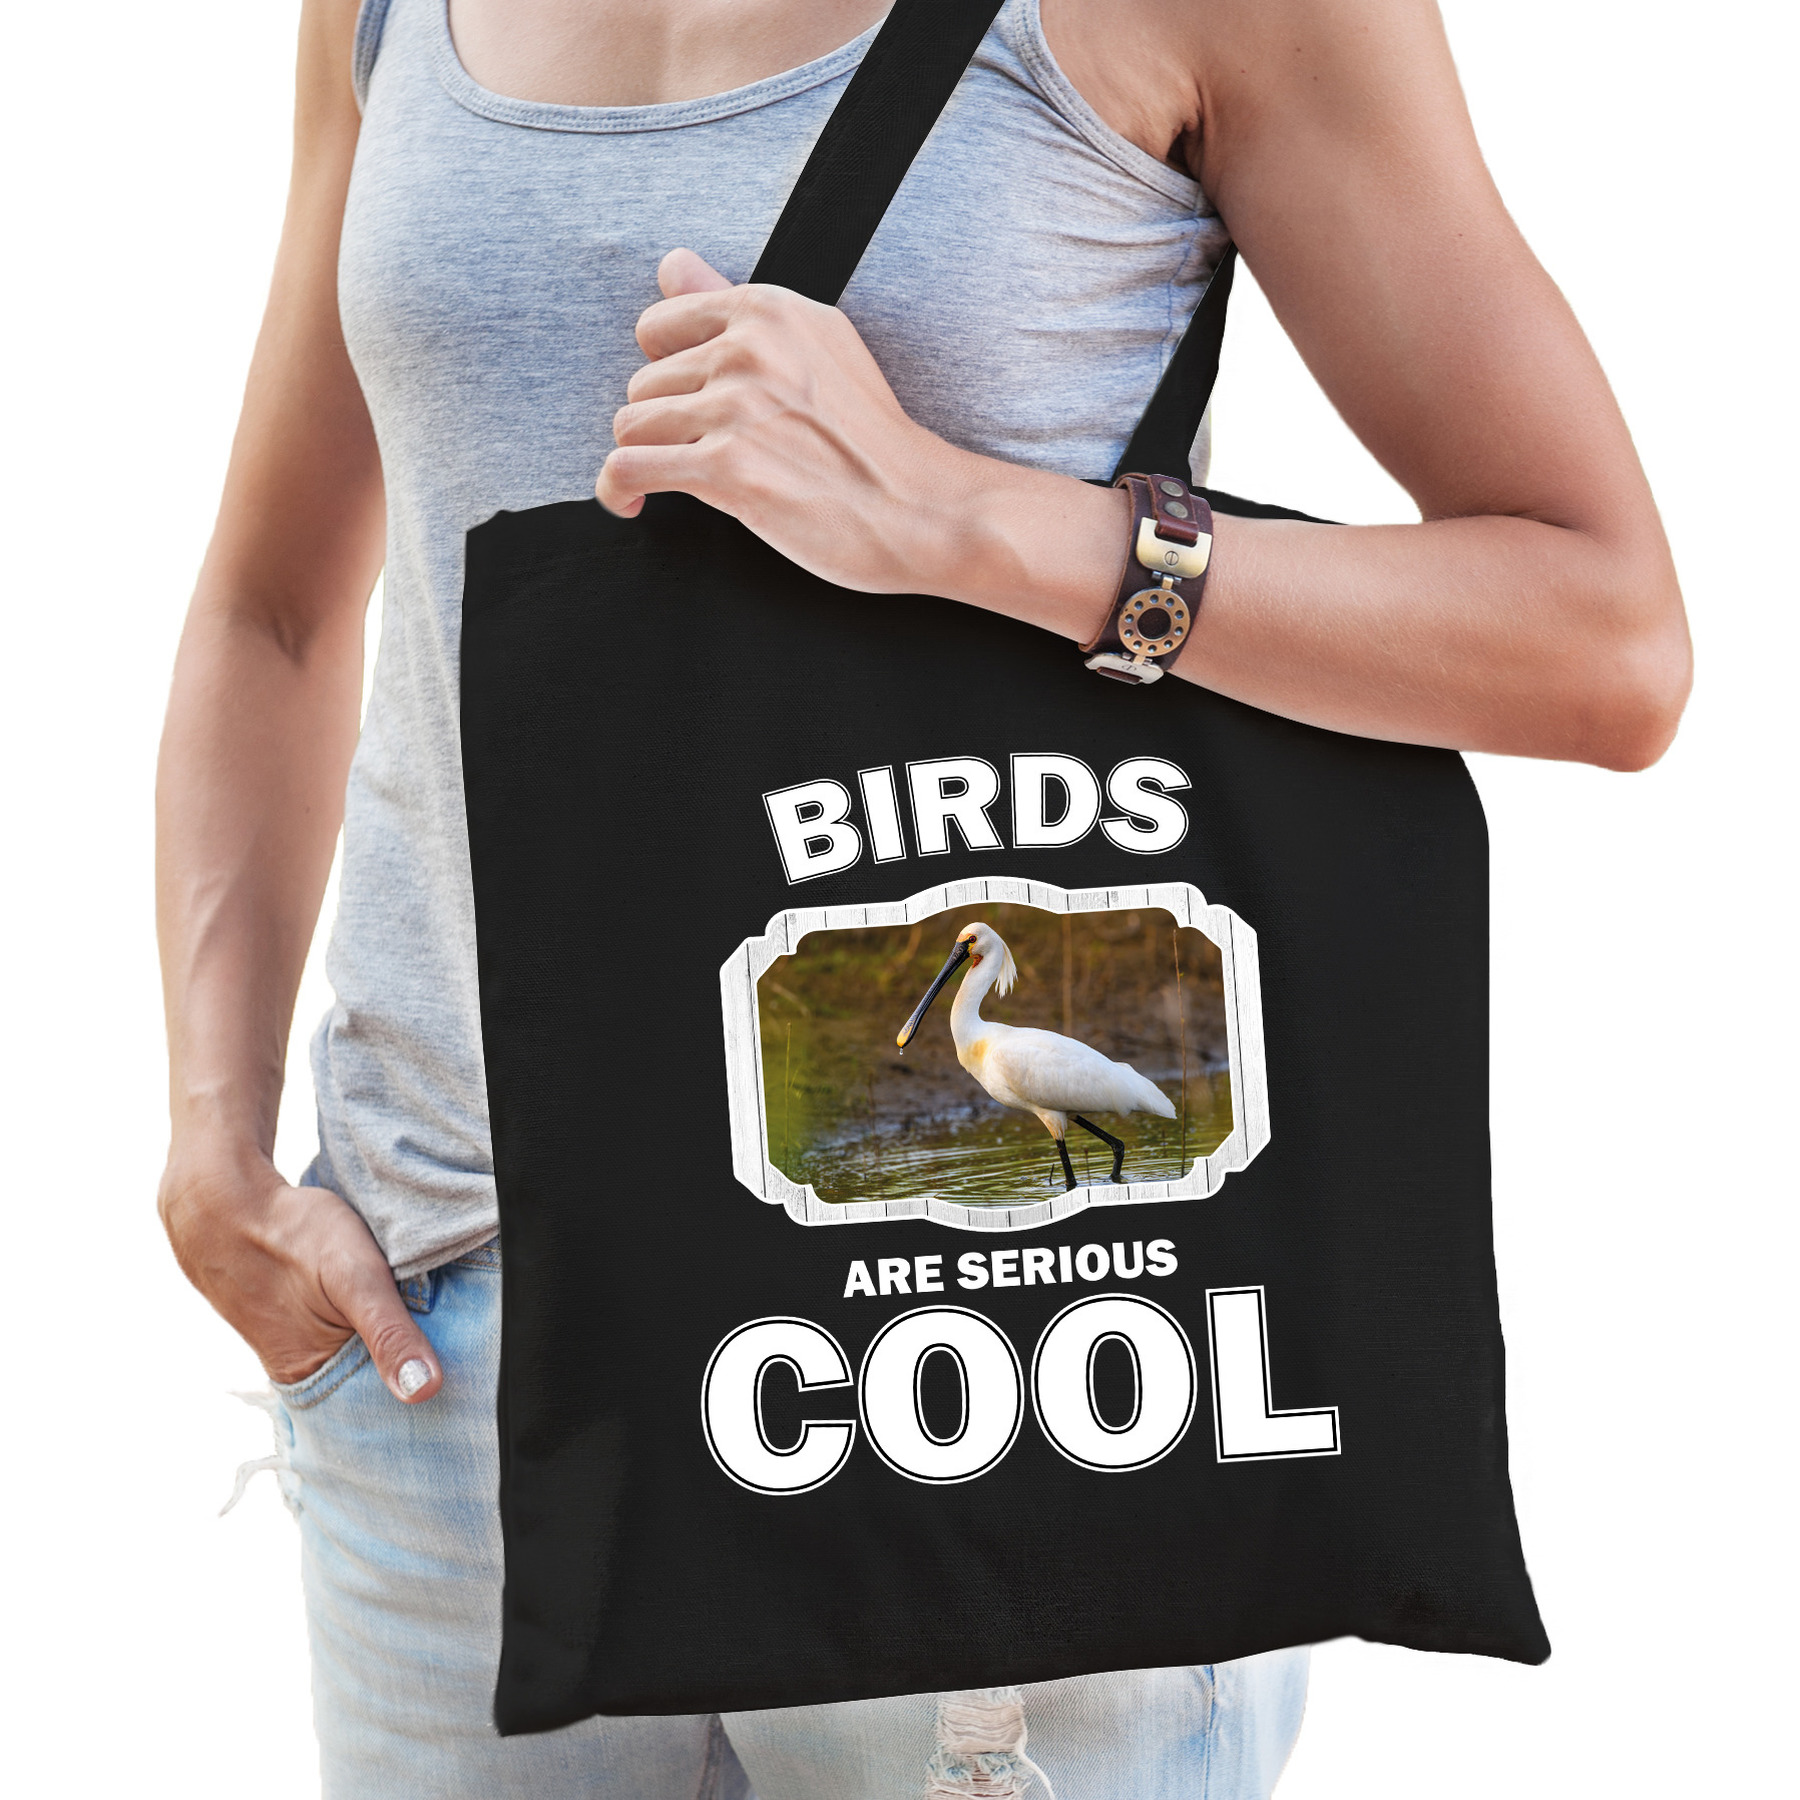 Katoenen tasje birds are serious cool zwart - vogels/ lepelaar vogel cadeau tas